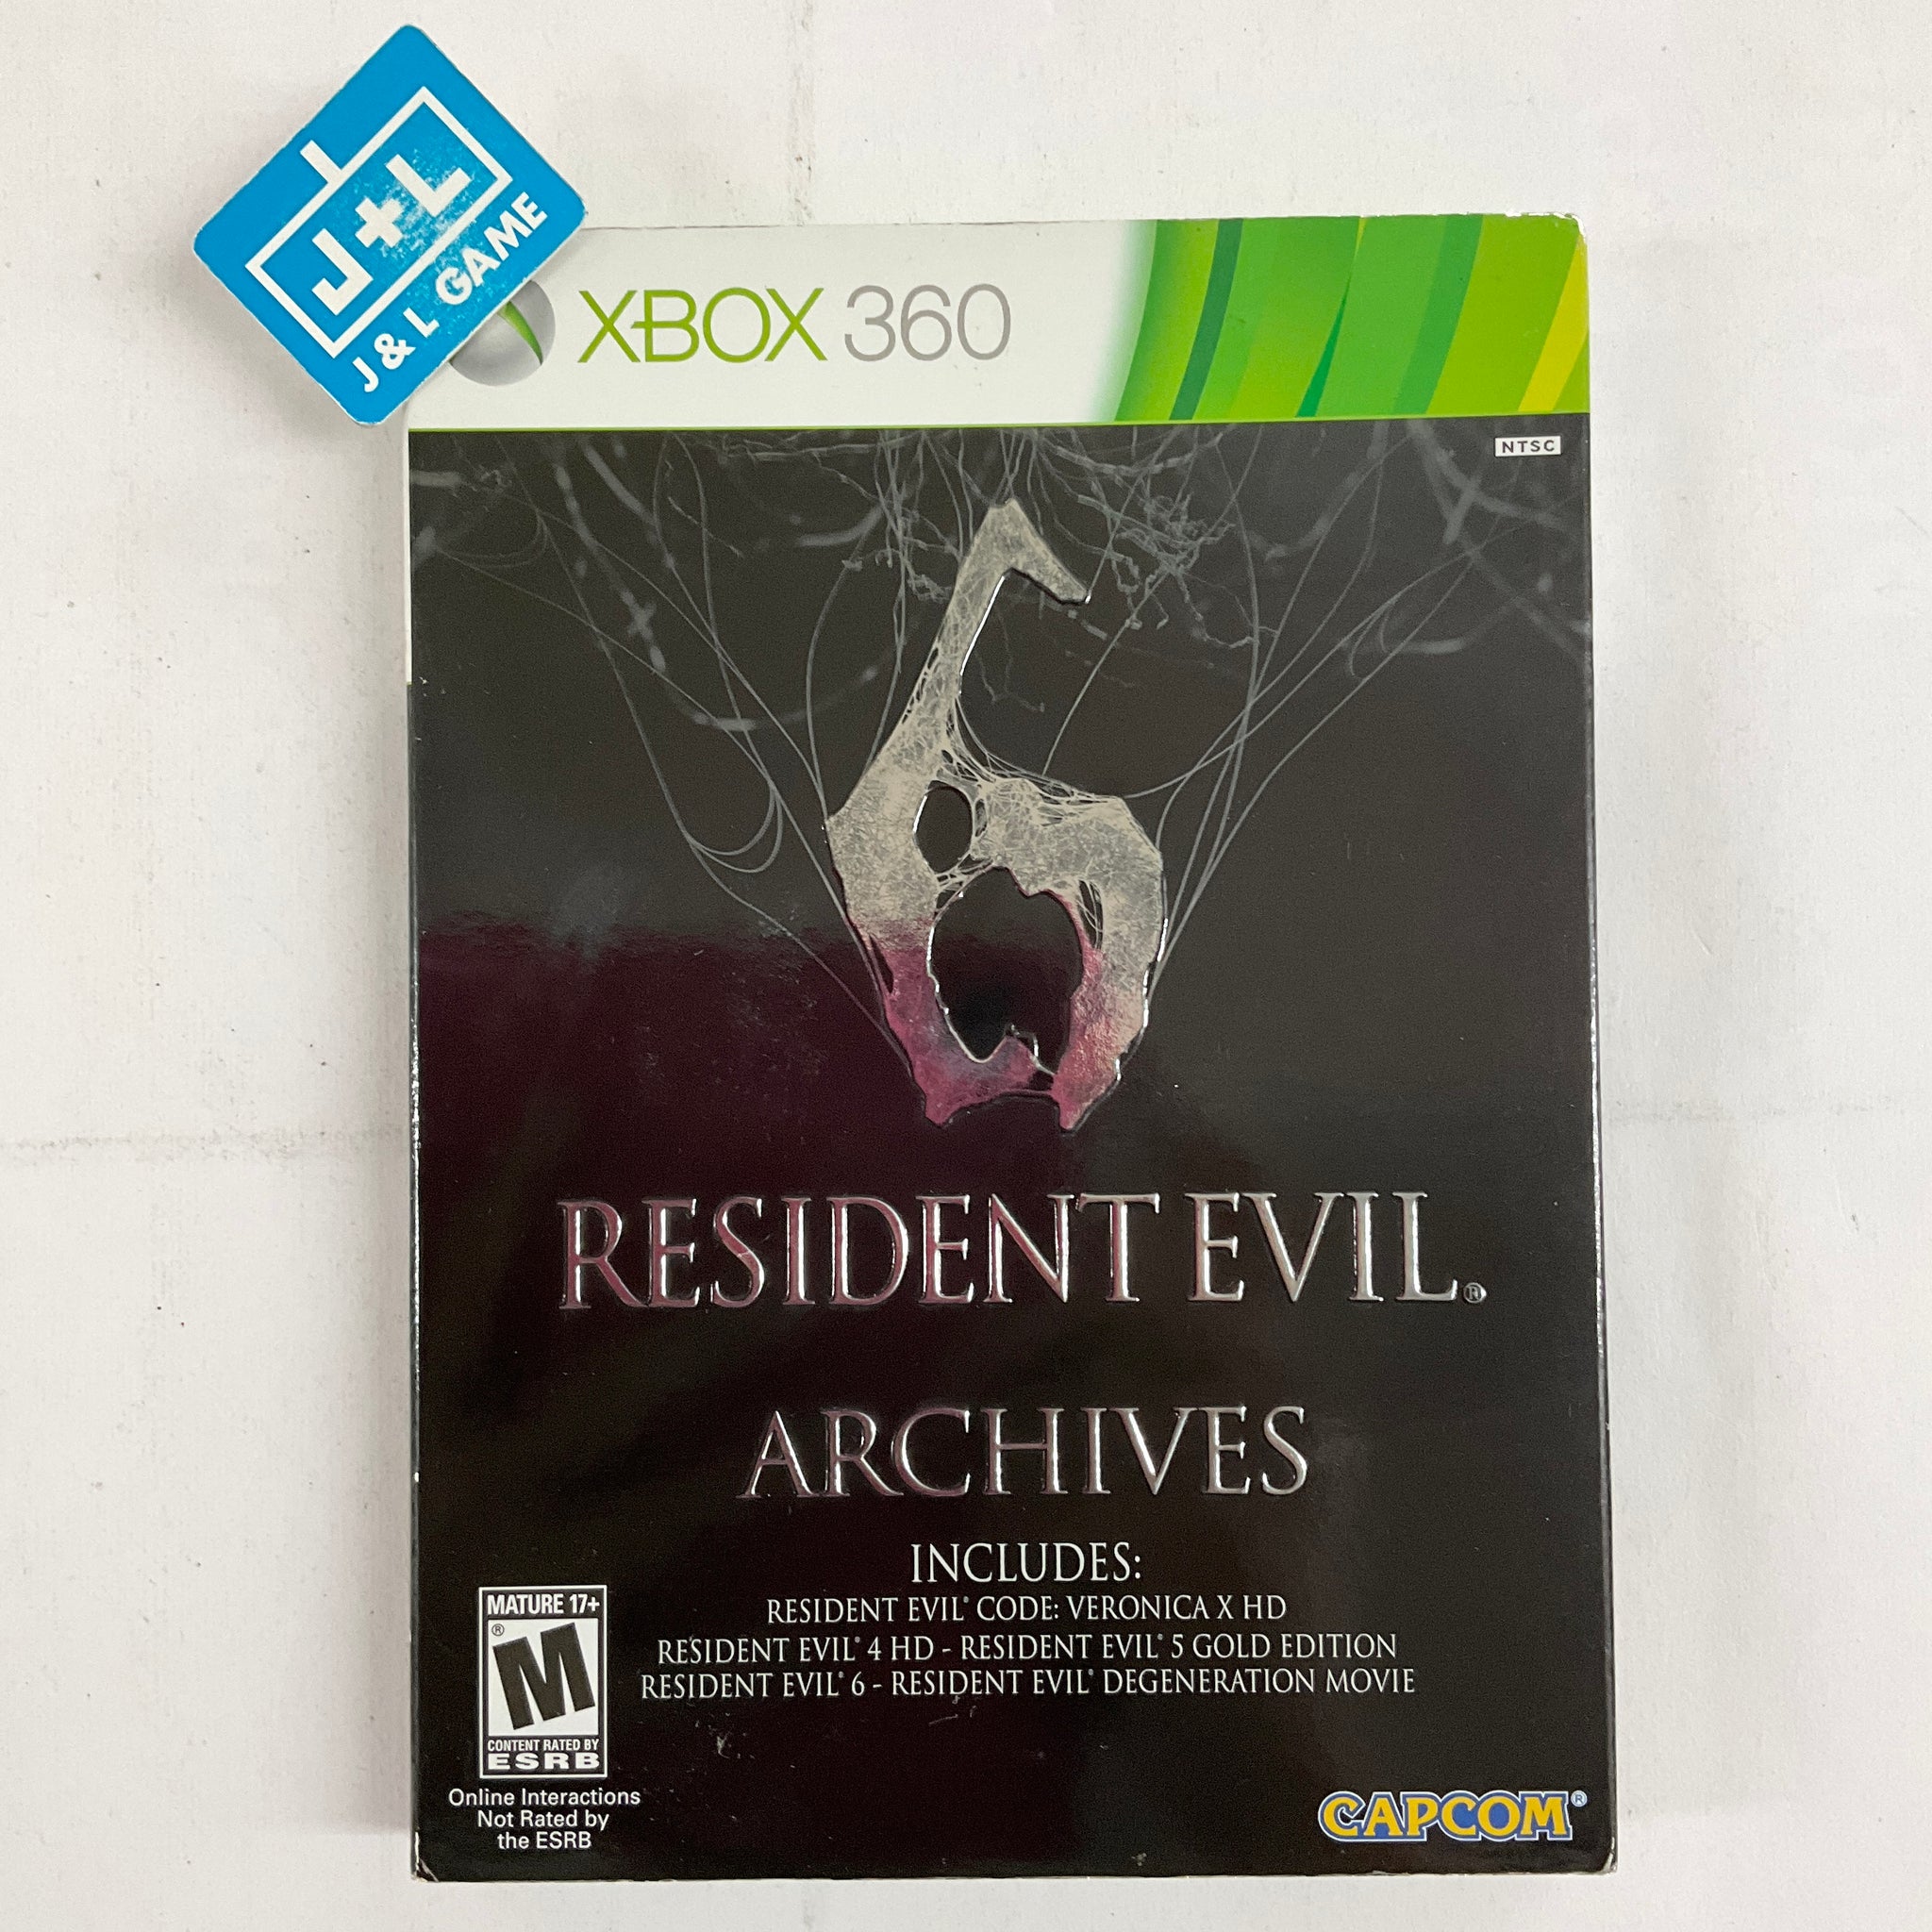 Buy cheap RESIDENT EVIL CODE: Veronica X Xbox 360 key - lowest price